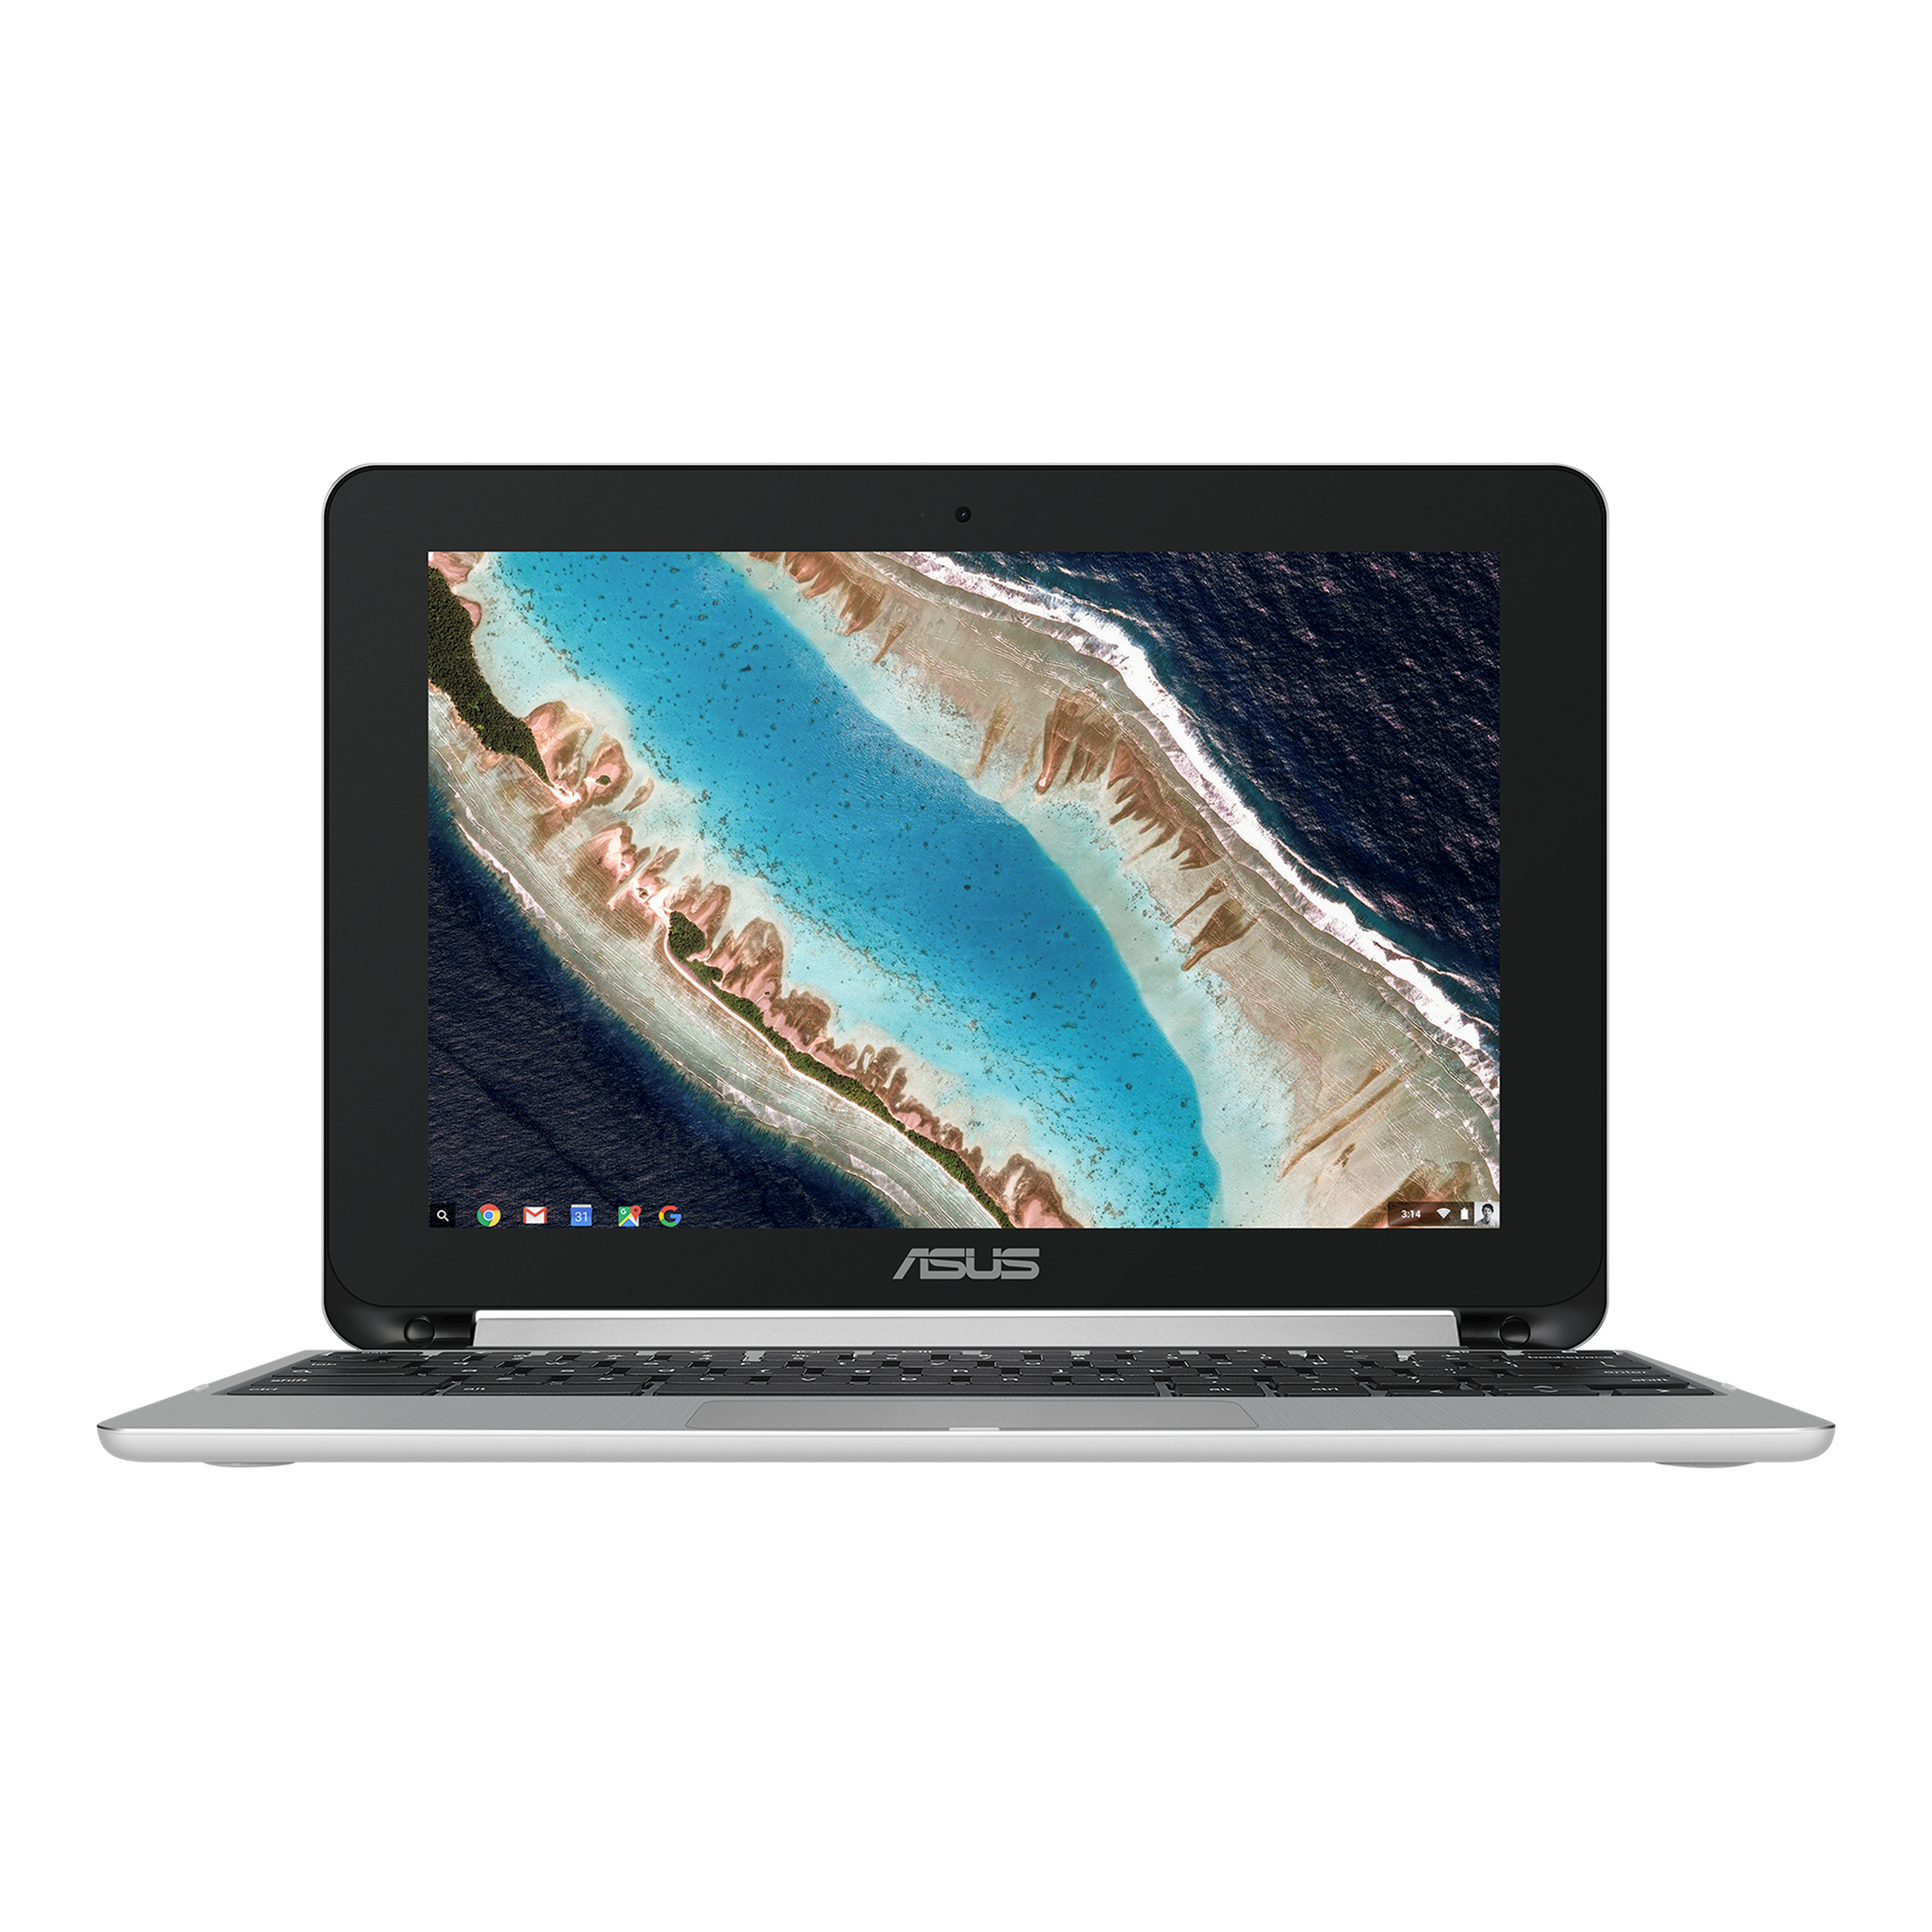 ASUS Chromebook Flip C101｜Laptops For Home｜ASUS Canada